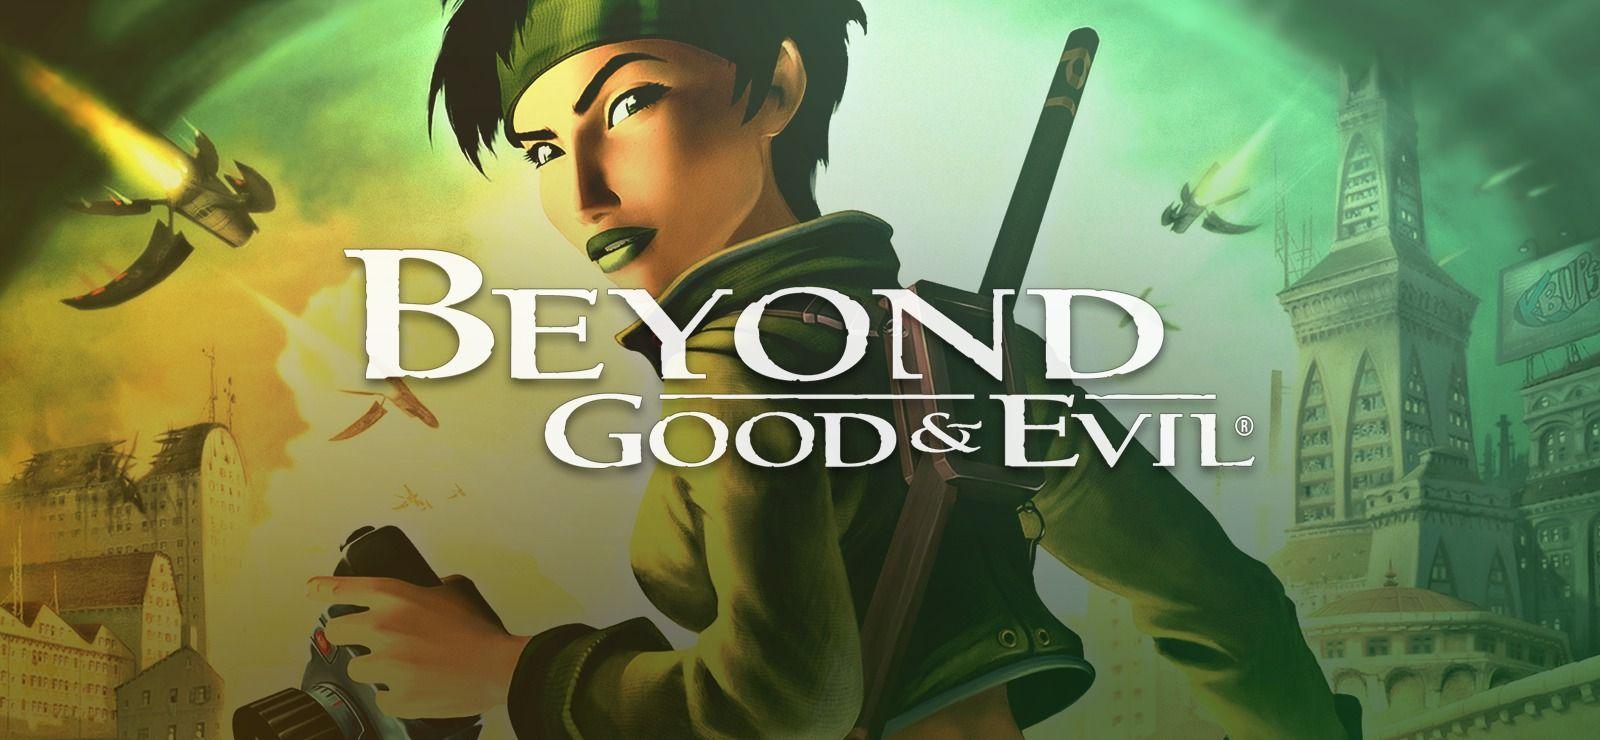 Beyond Good & Evil™ -75% on GOG.com